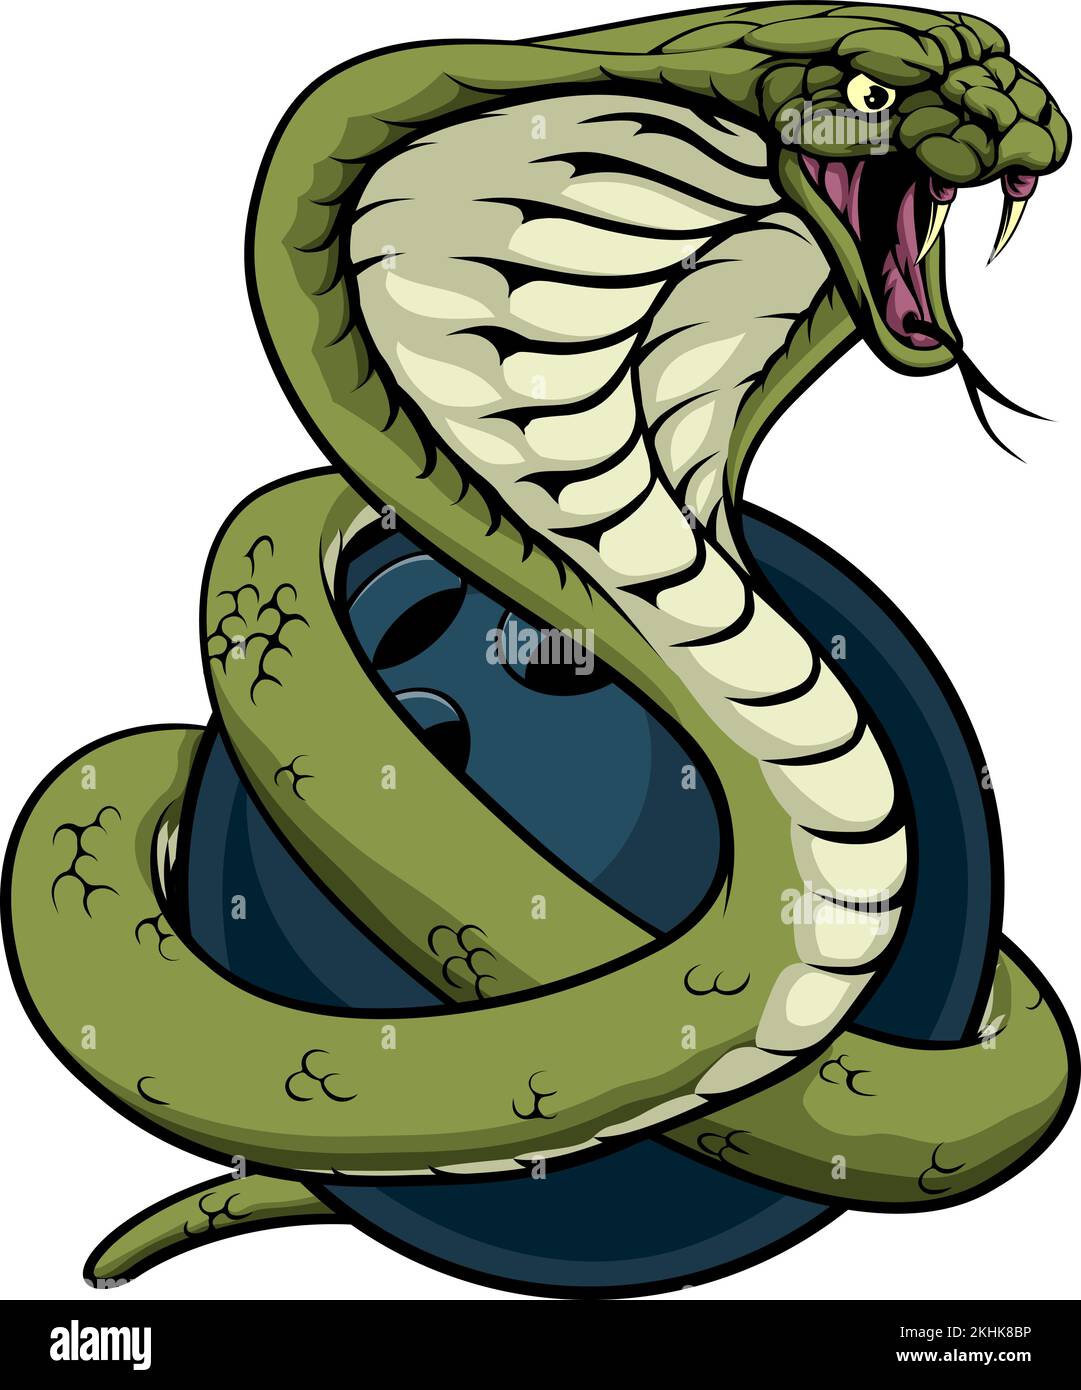 Cobra Snake Bowling Ball Animal Sports Team Mascot Illustrazione Vettoriale